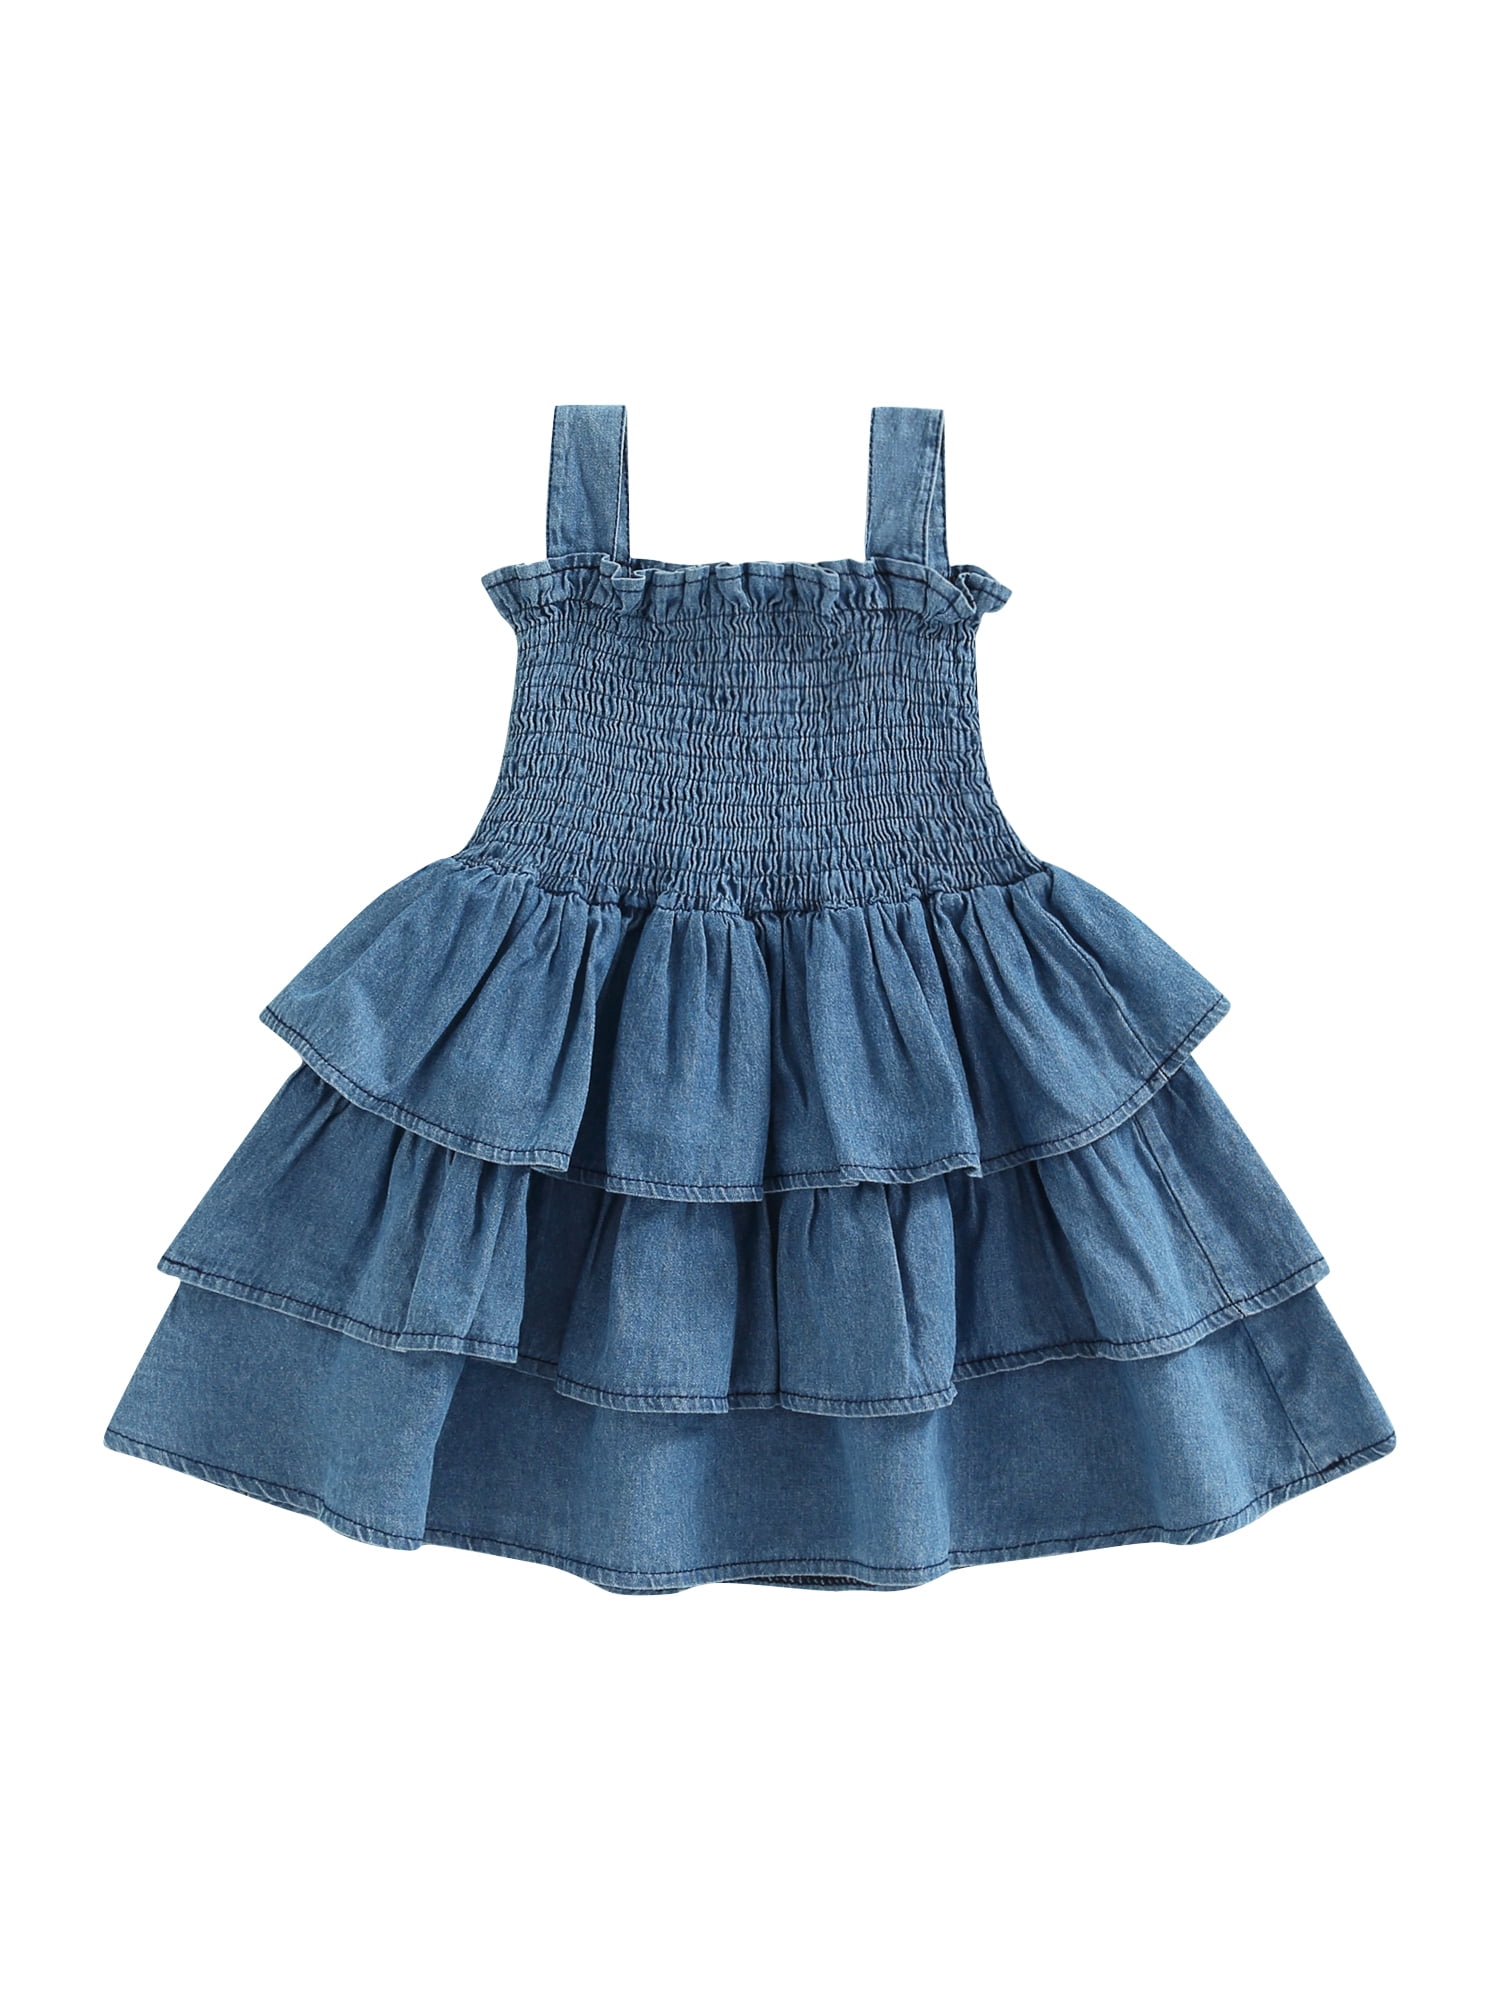 Girls Clothing | Denim Frock For 2-4 Years Baby Girl | Freeup-daiichi.edu.vn